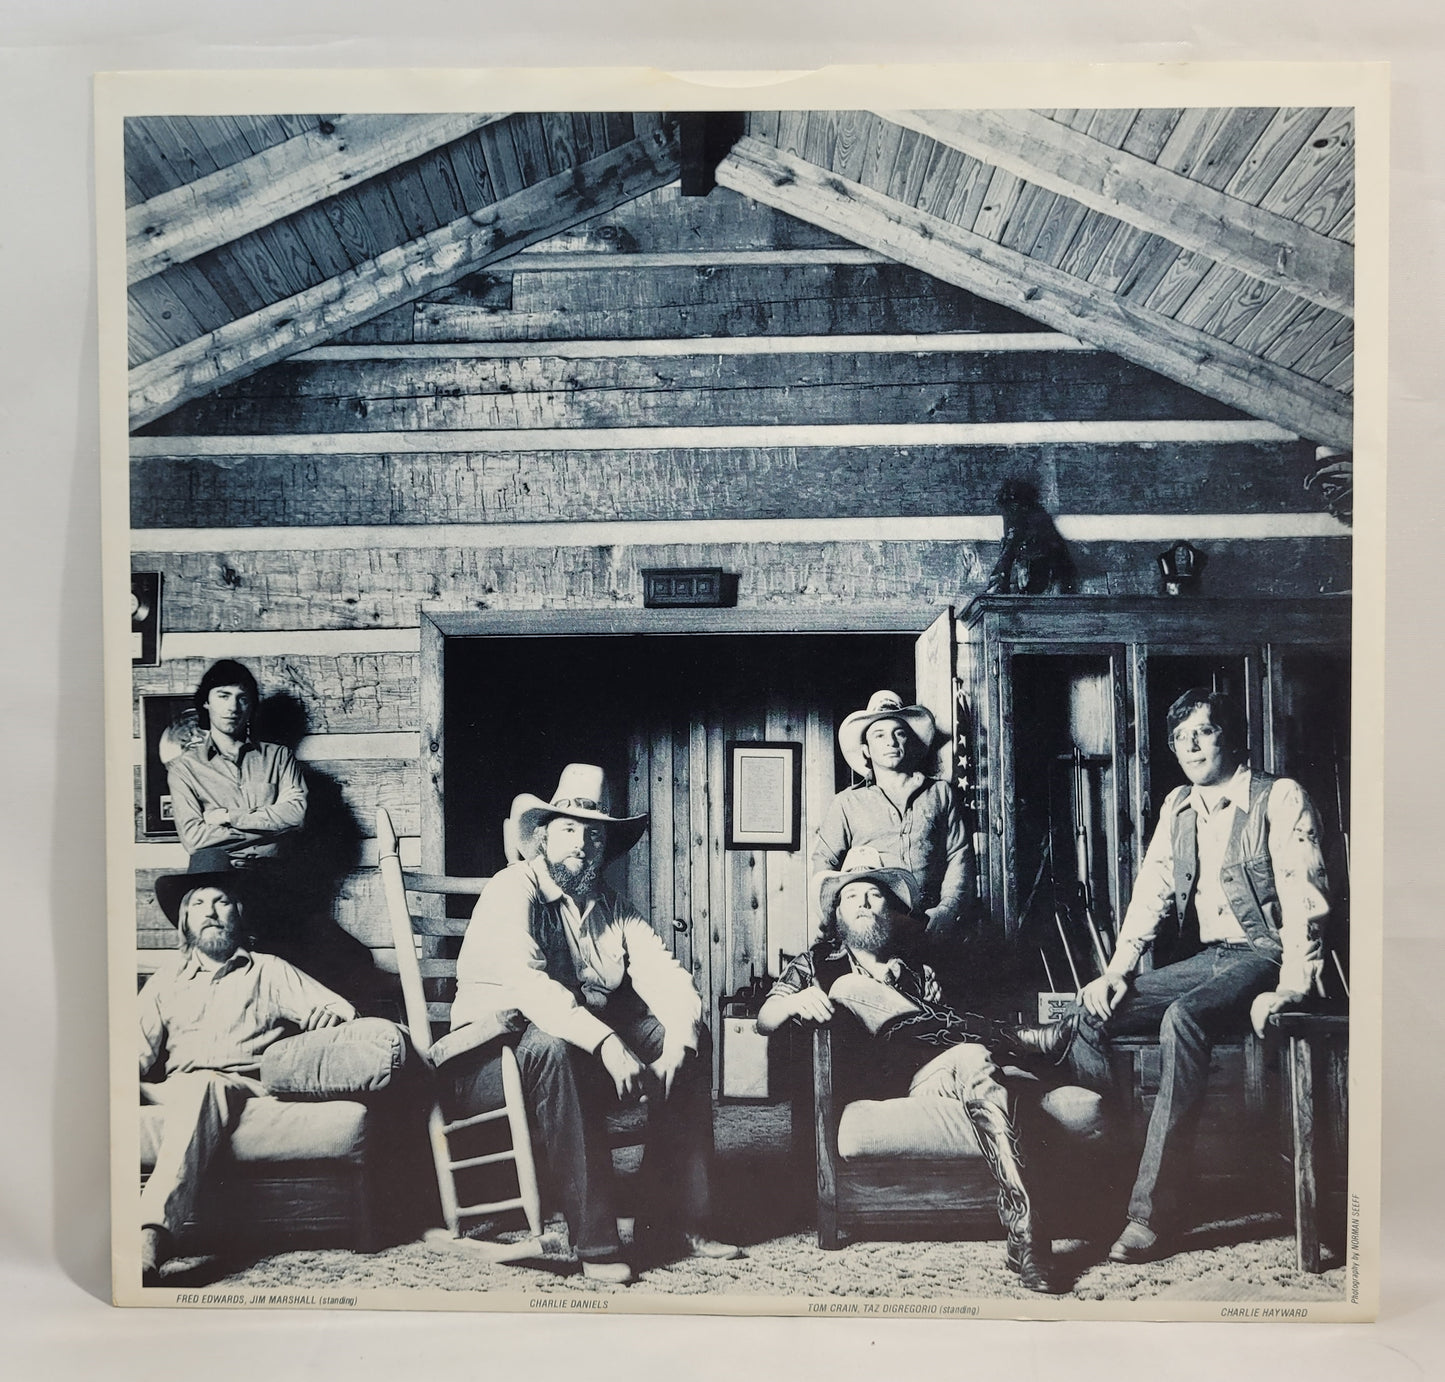 The Charlie Daniels Band - Full Moon [Vinyl Record LP] [B]